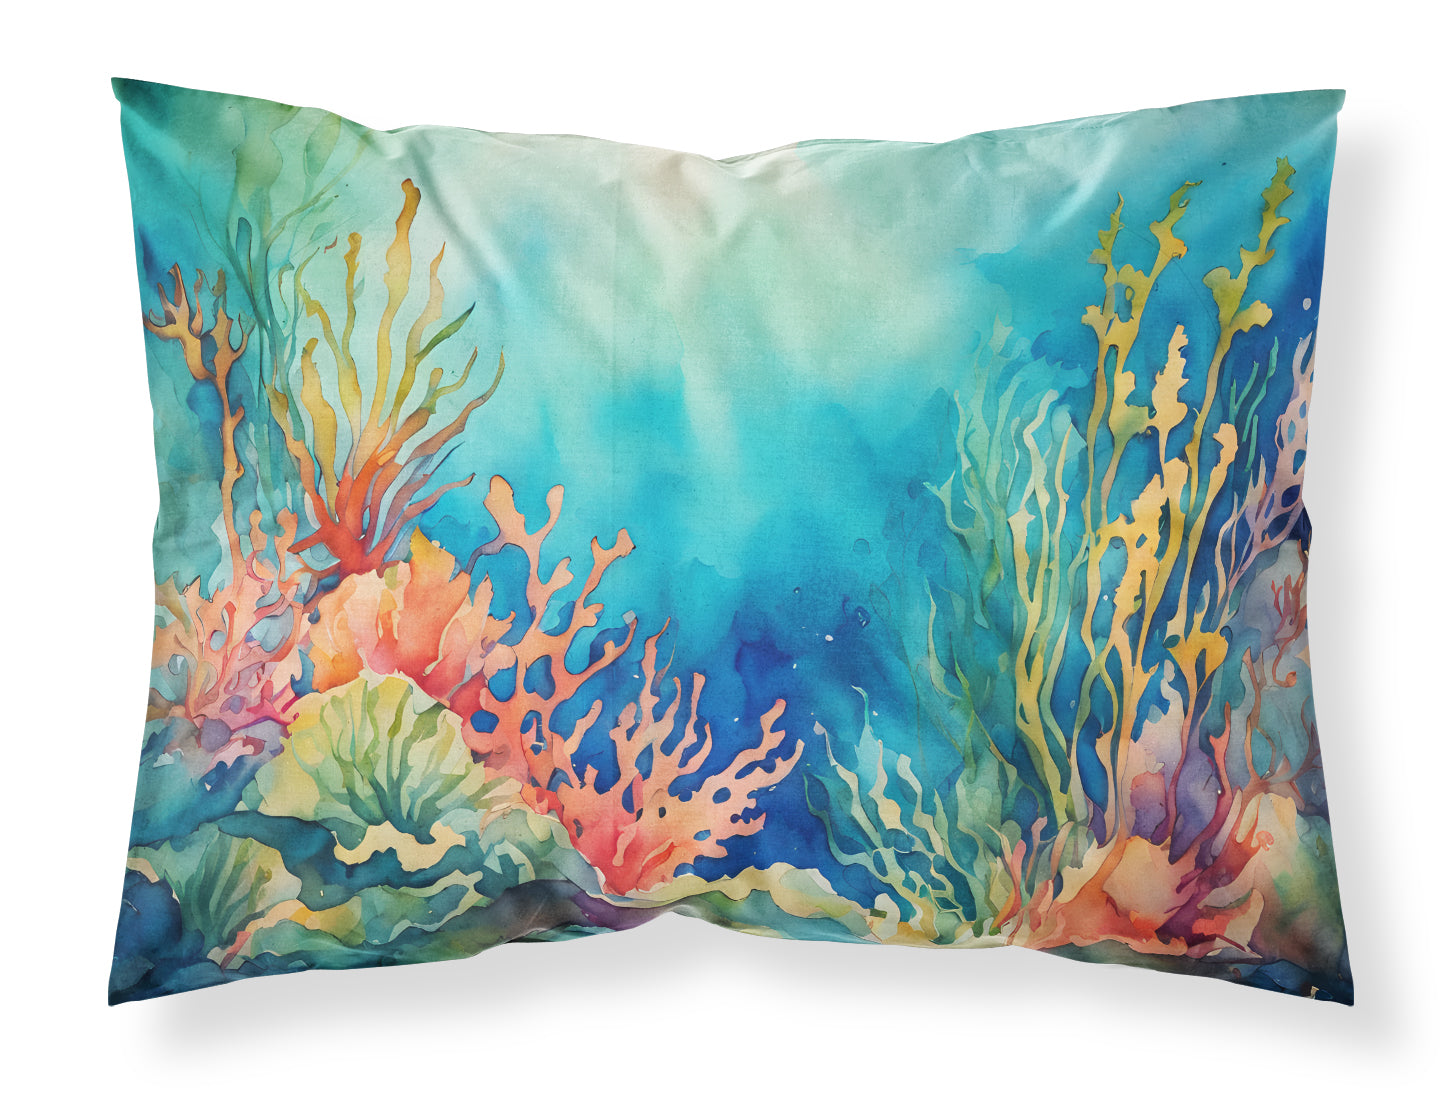 Buy this Seaweed Standard Pillowcase